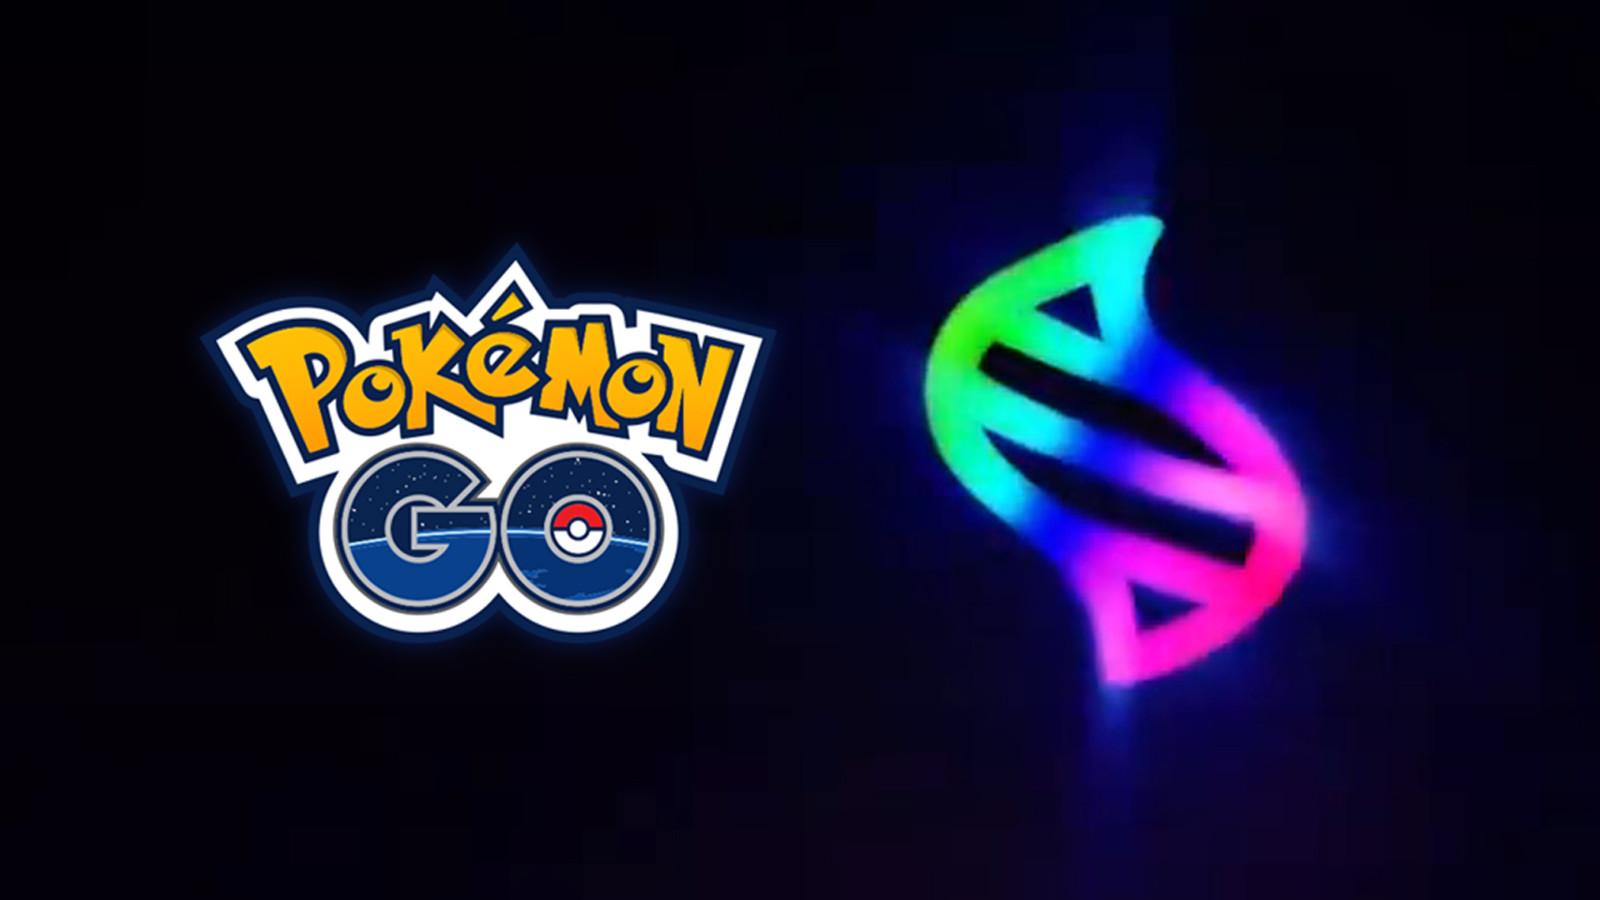 Mega Charizard X vs Y in Pokemon Go: Which is better? - Dexerto